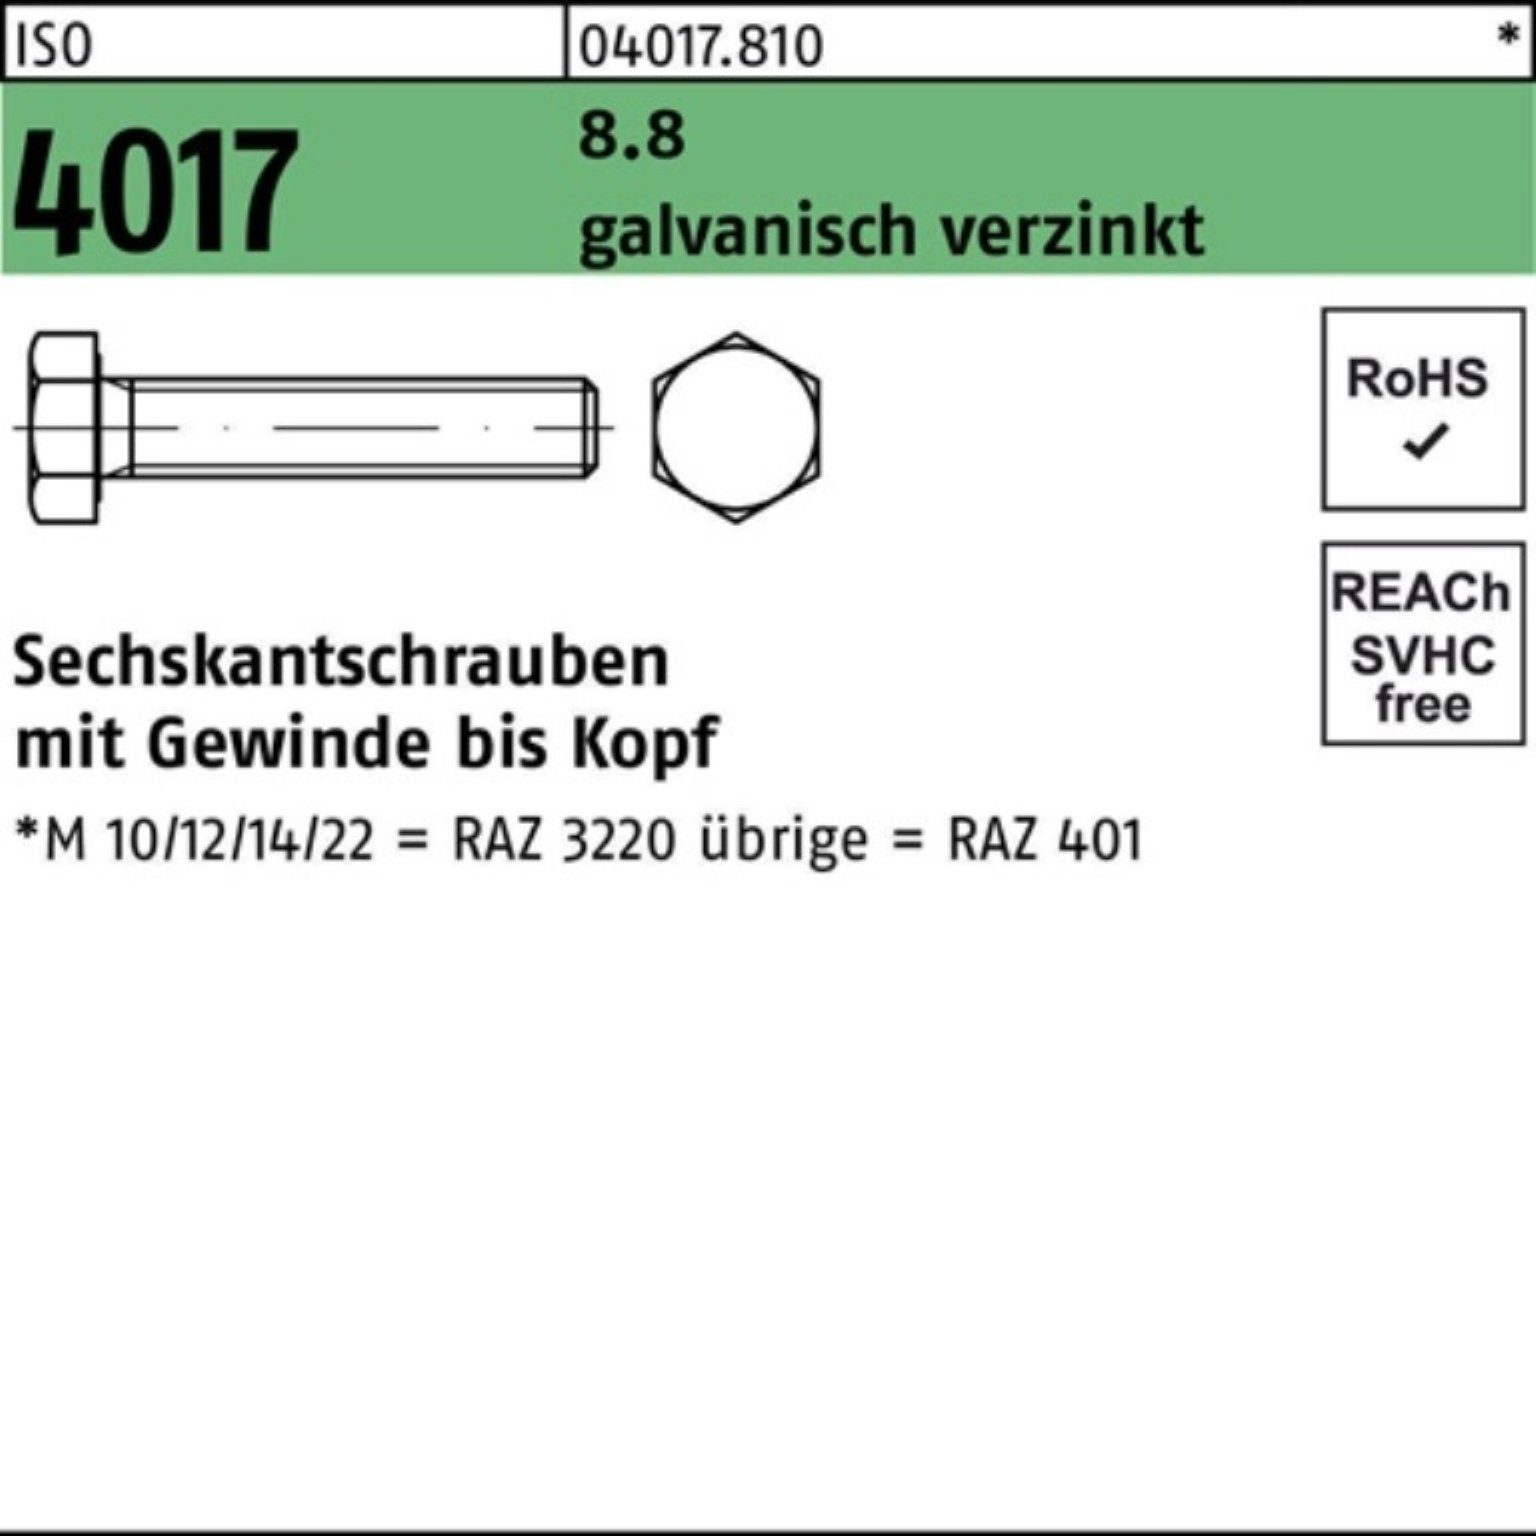 Bufab Sechskantschraube 100er 8.8 50 ISO galv.verz. M24x 25 Pack 4017 St Sechskantschraube VG